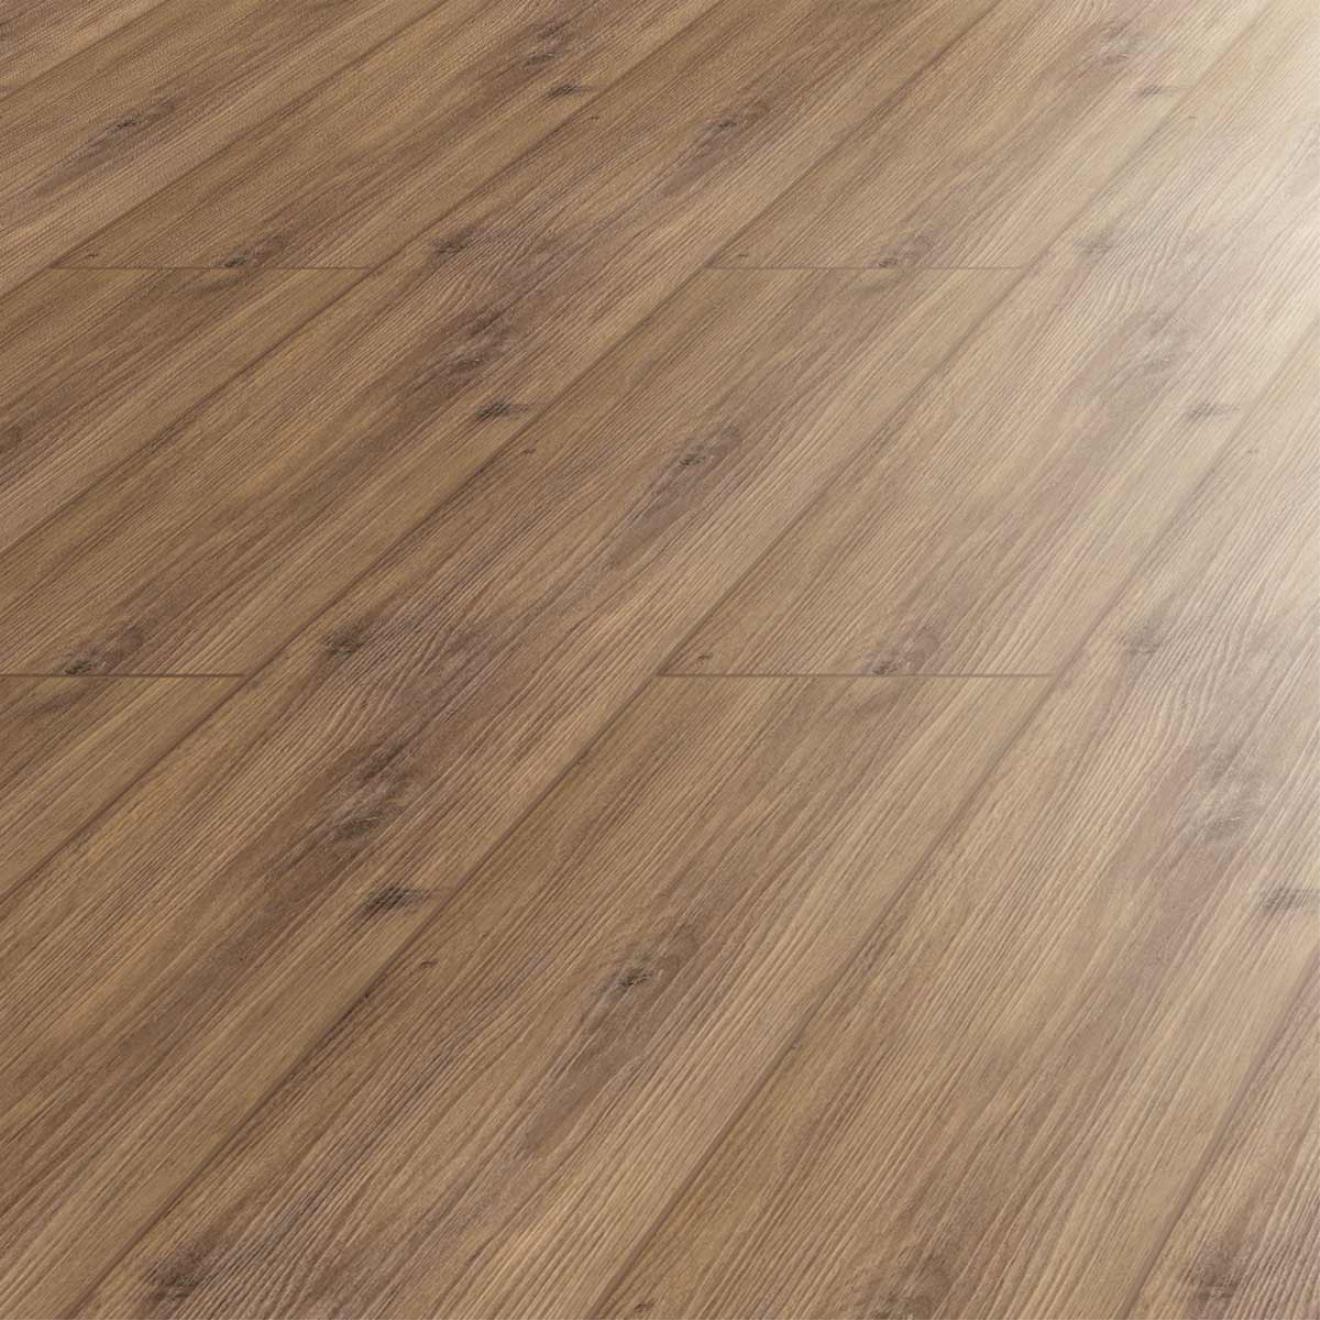 Hydro Step 5G Click LVT Flooring Mature Oak with Underlay